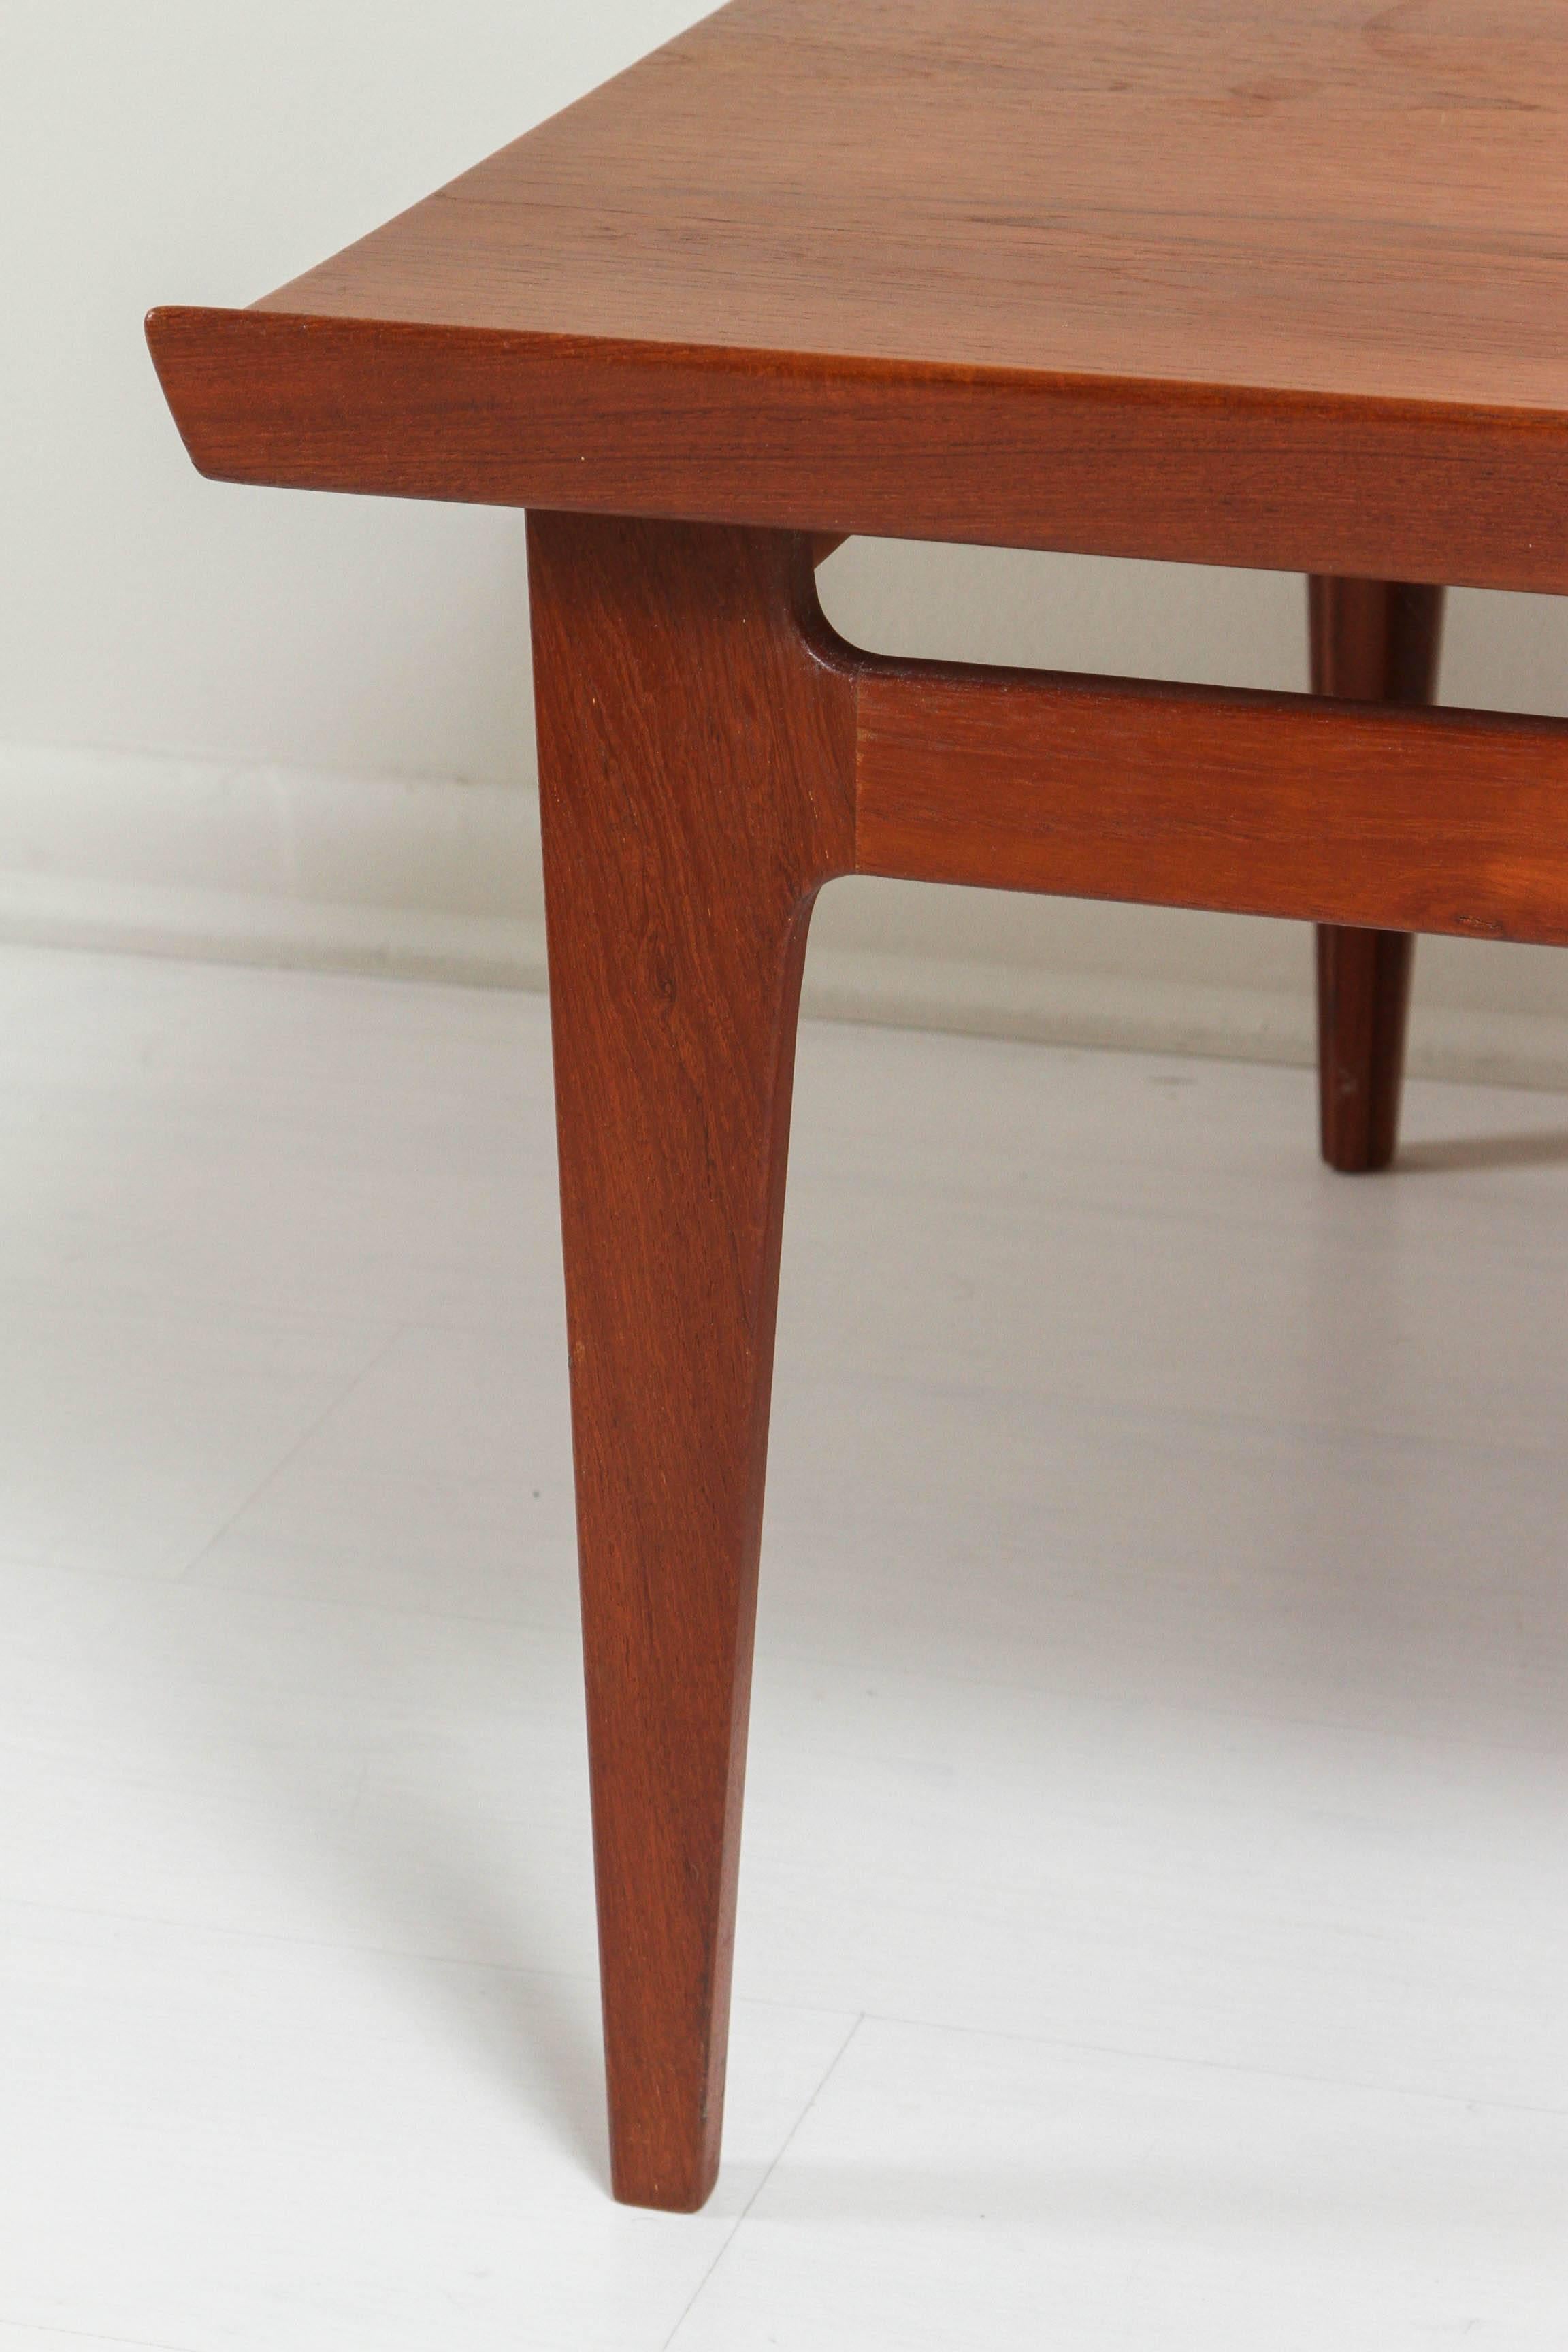 Vintage danish teakwood mid-sized table by Finn Juhl for France & Son.